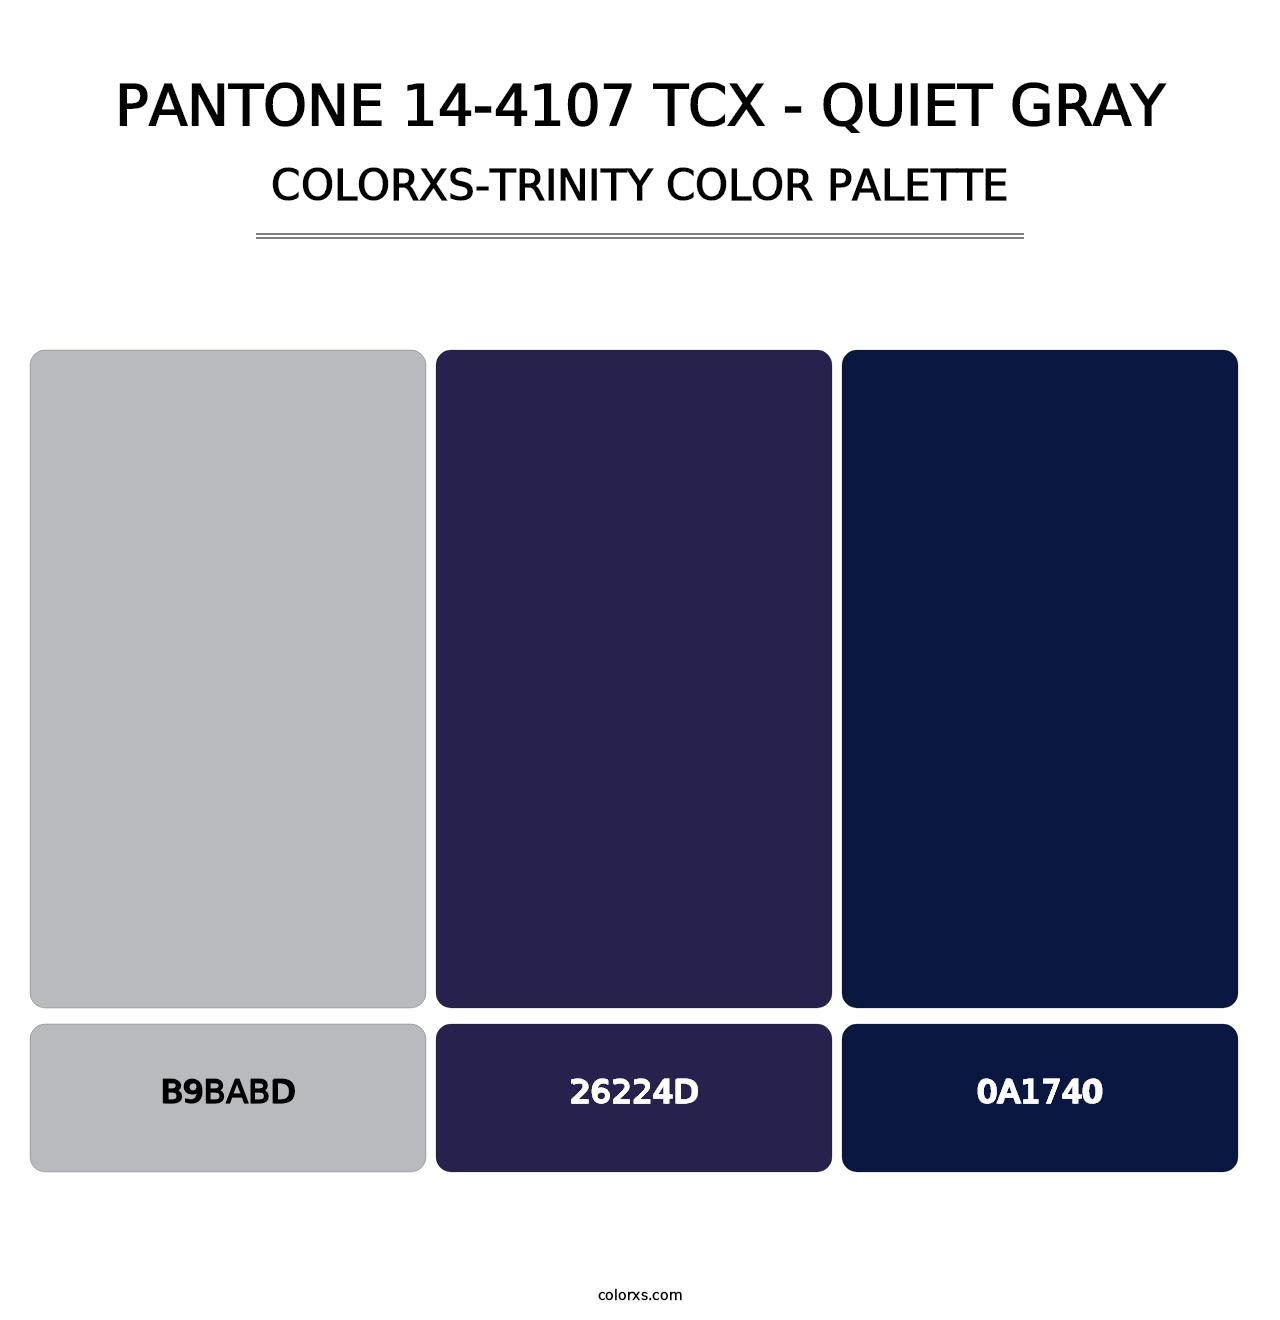 PANTONE 14-4107 TCX - Quiet Gray - Colorxs Trinity Palette